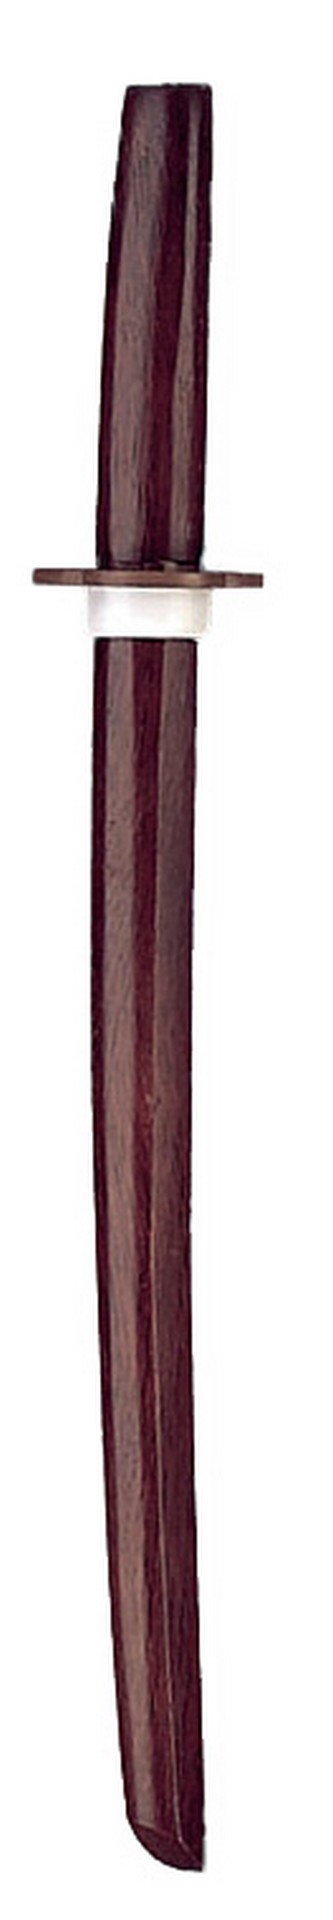 épée de samourai en bois